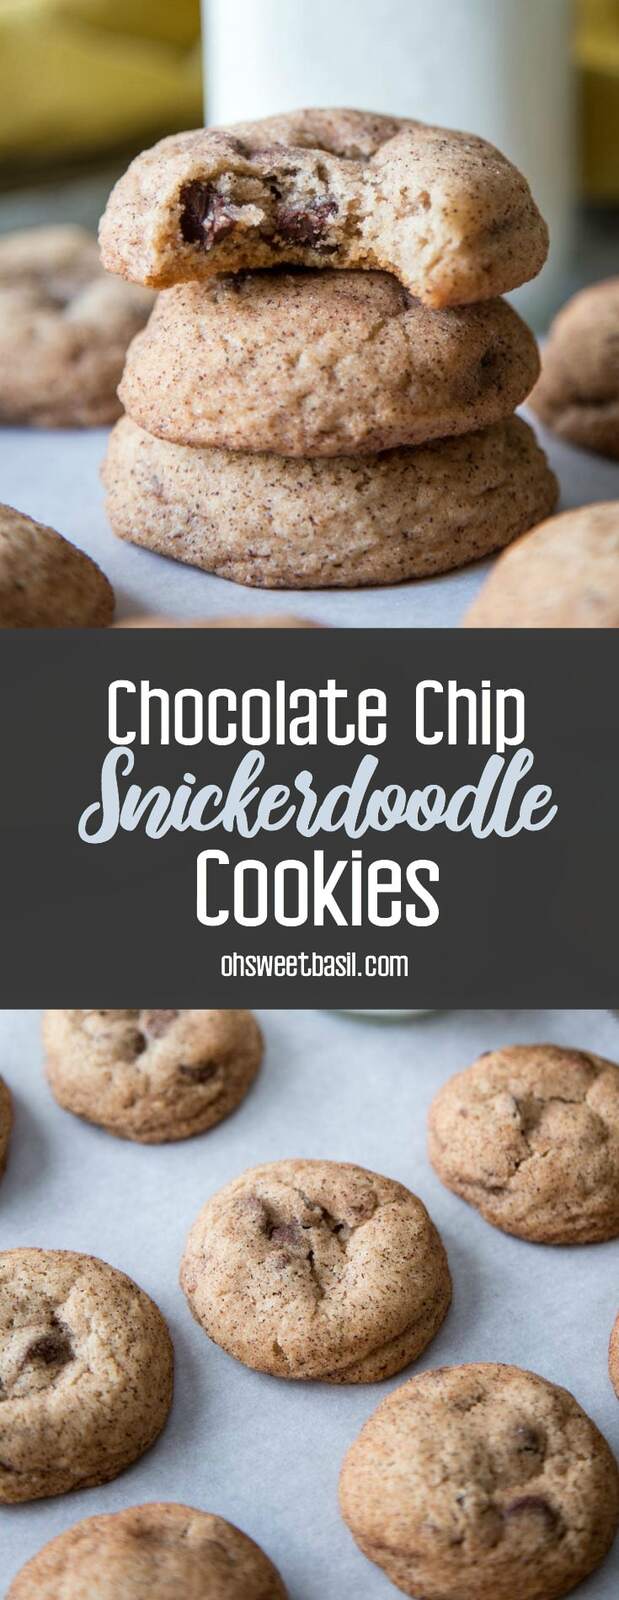 olate-Chip-Snickerdoodle-Cookies-ohsweetbasil.com_.jpg